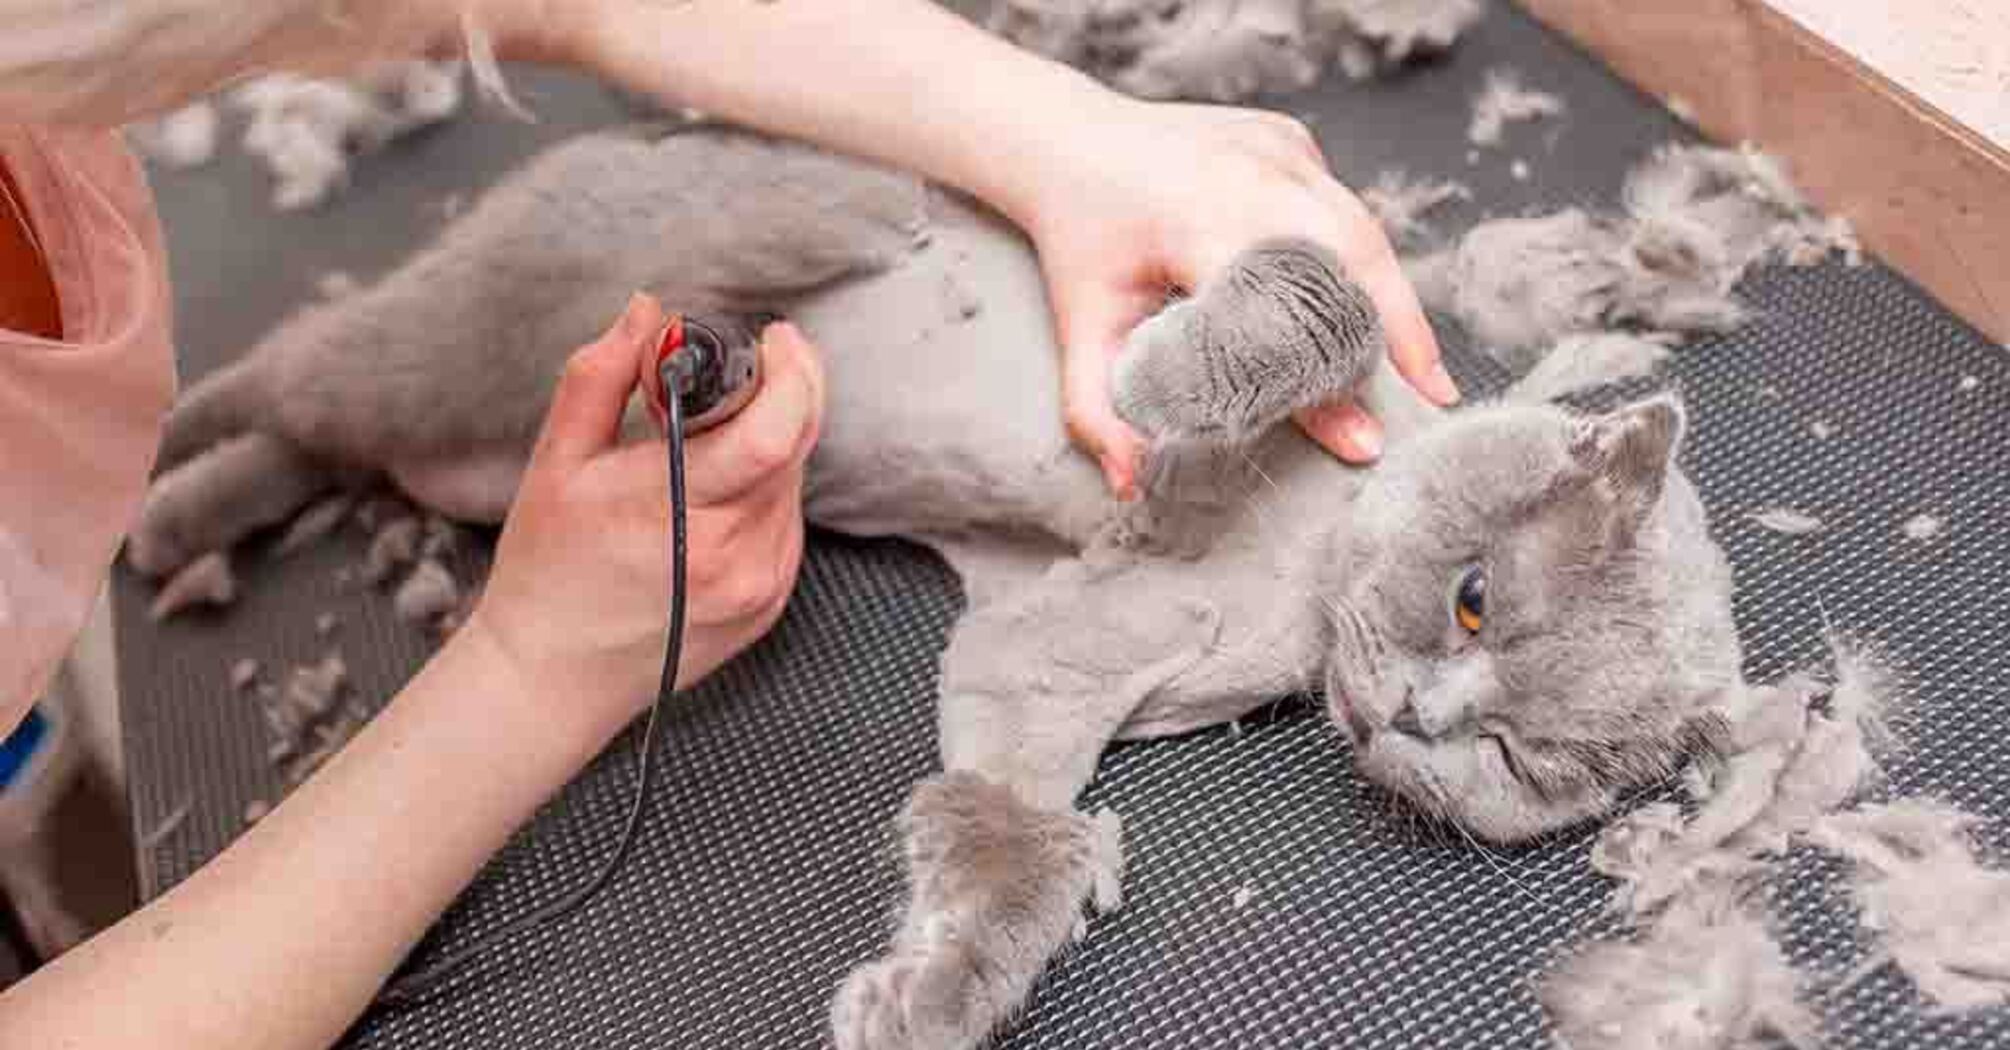 Is it worth shaving cats